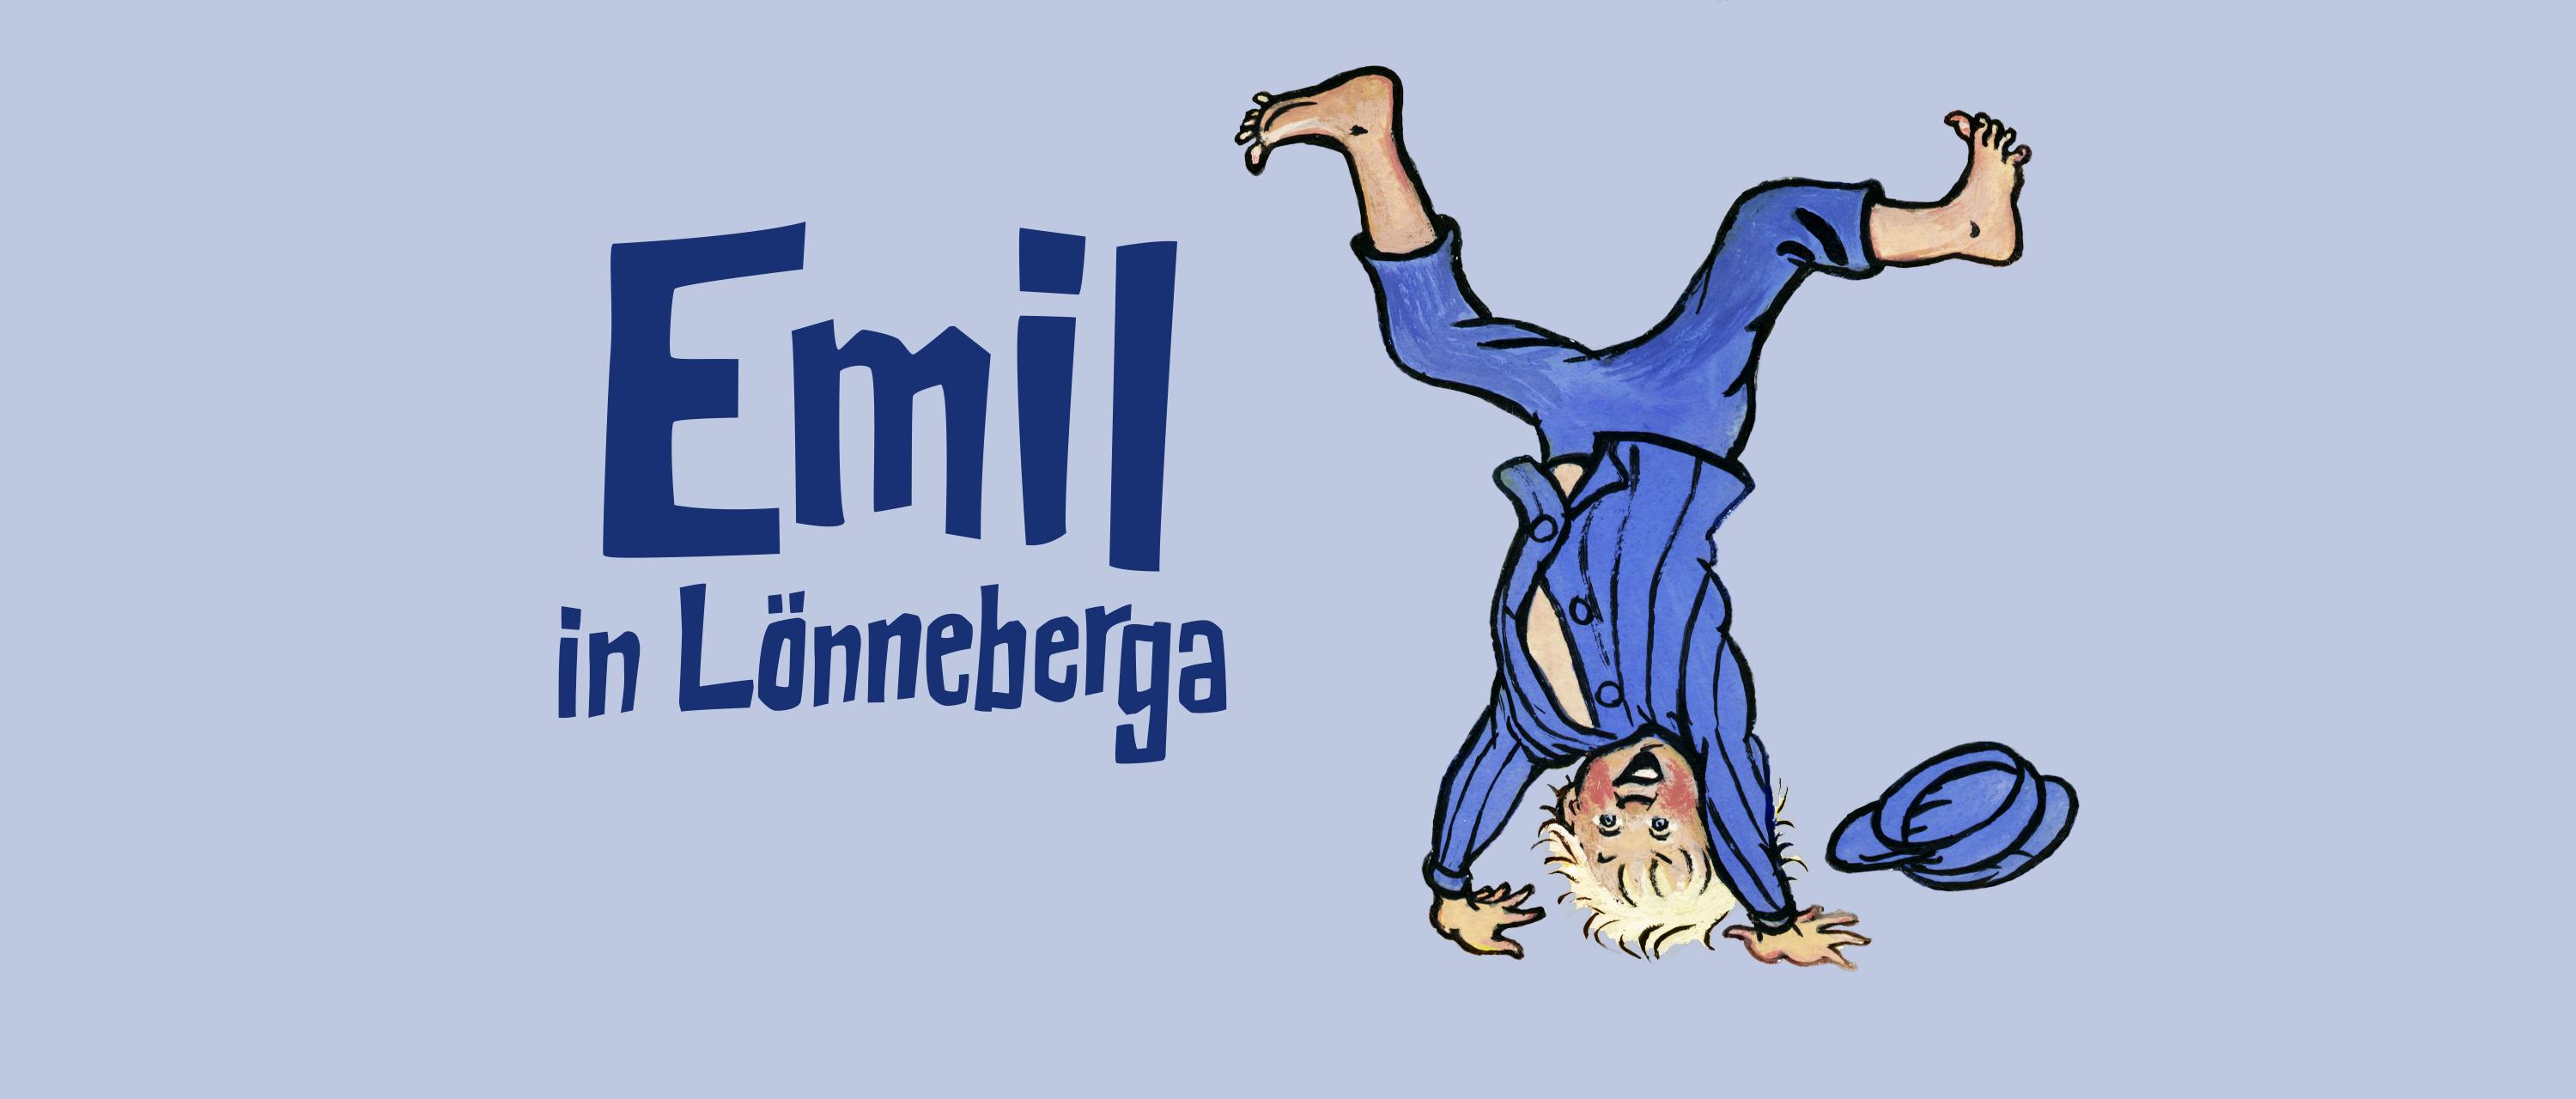 Emil in Lönneberga, logo and image